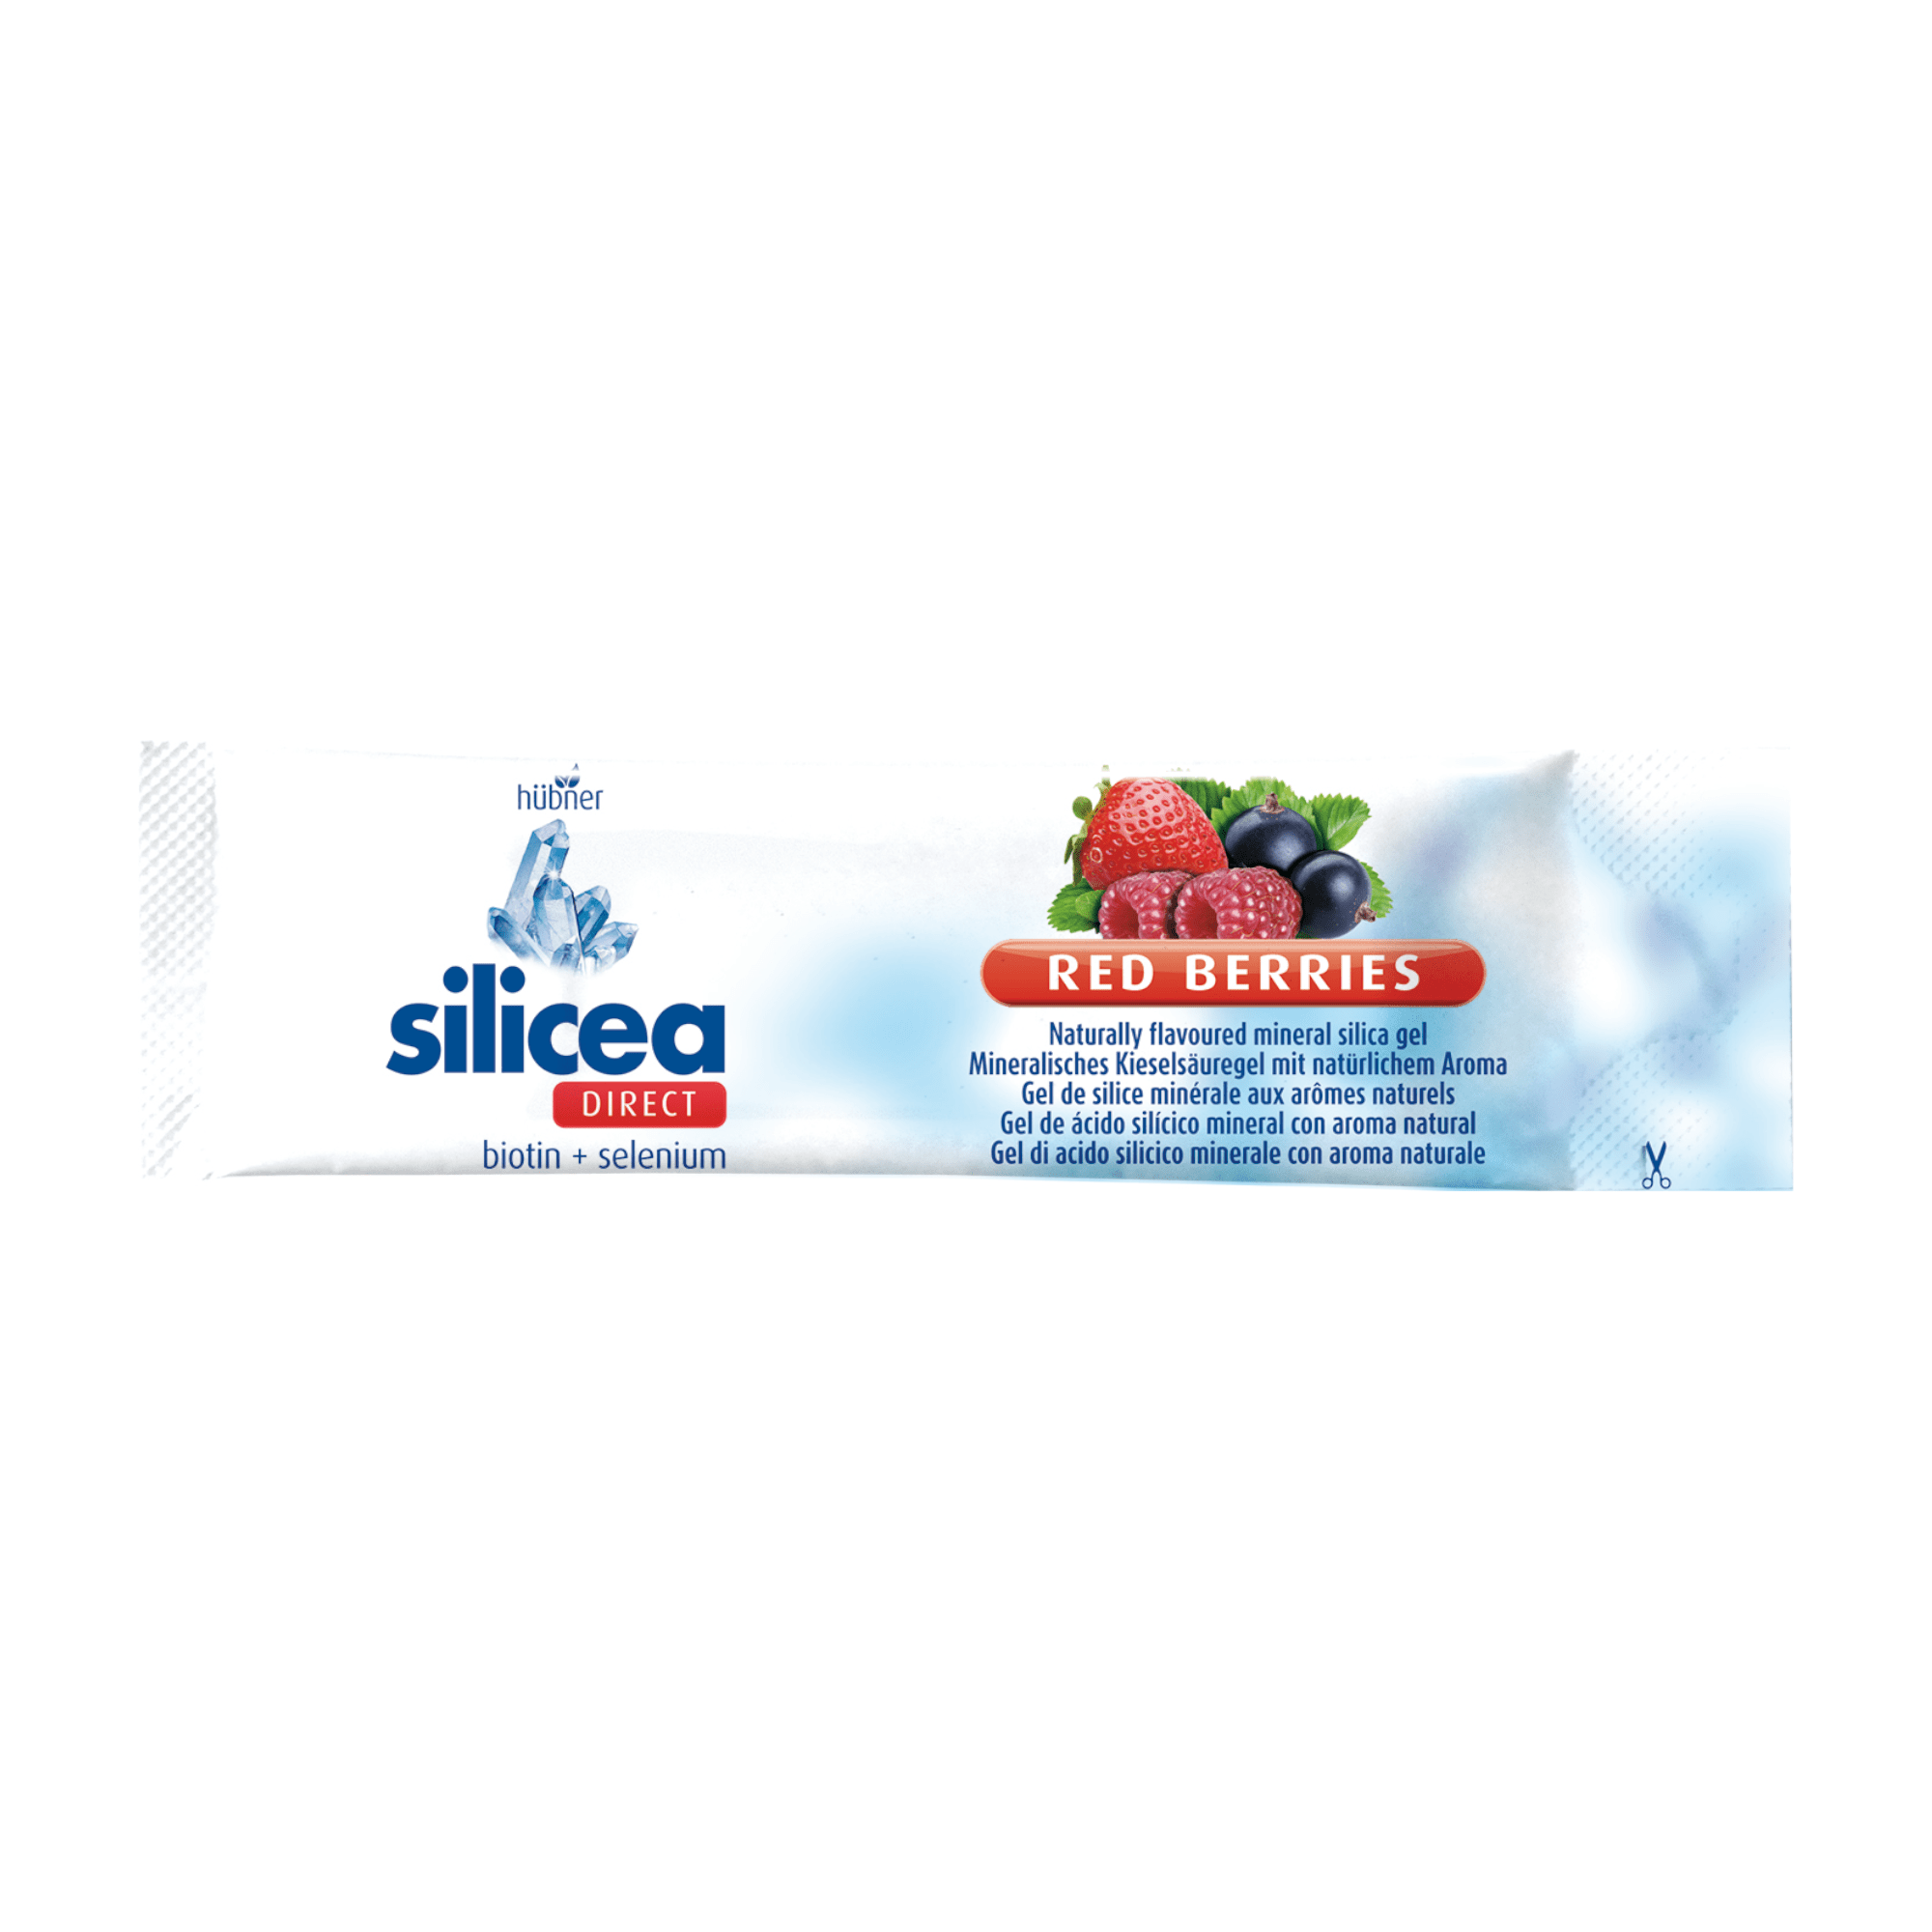 Hübner Original silicea® Gel + Biotine 500 ml - Redcare Pharmacie